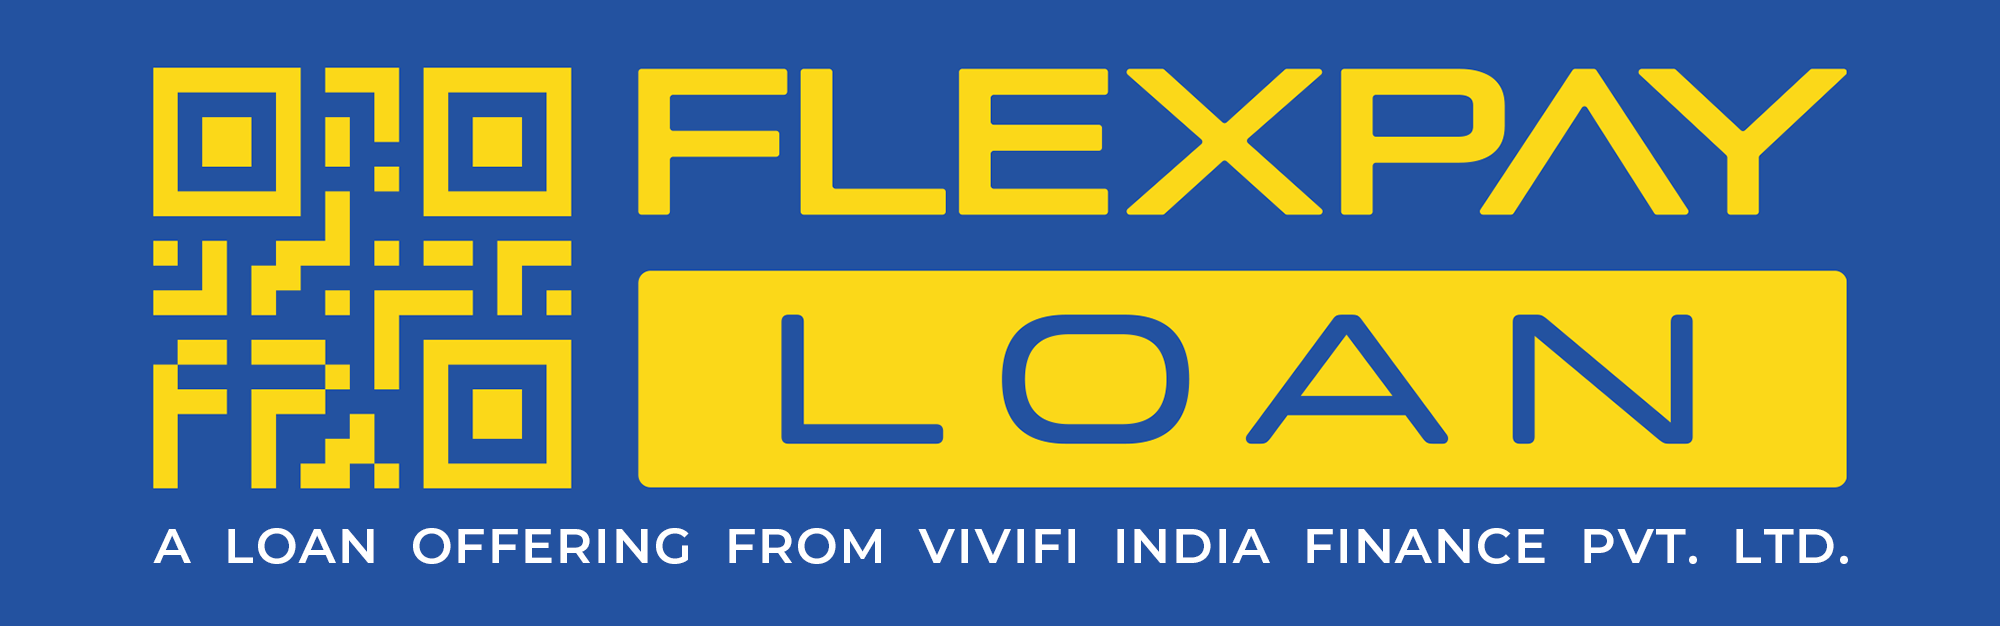 FlexPay Loan